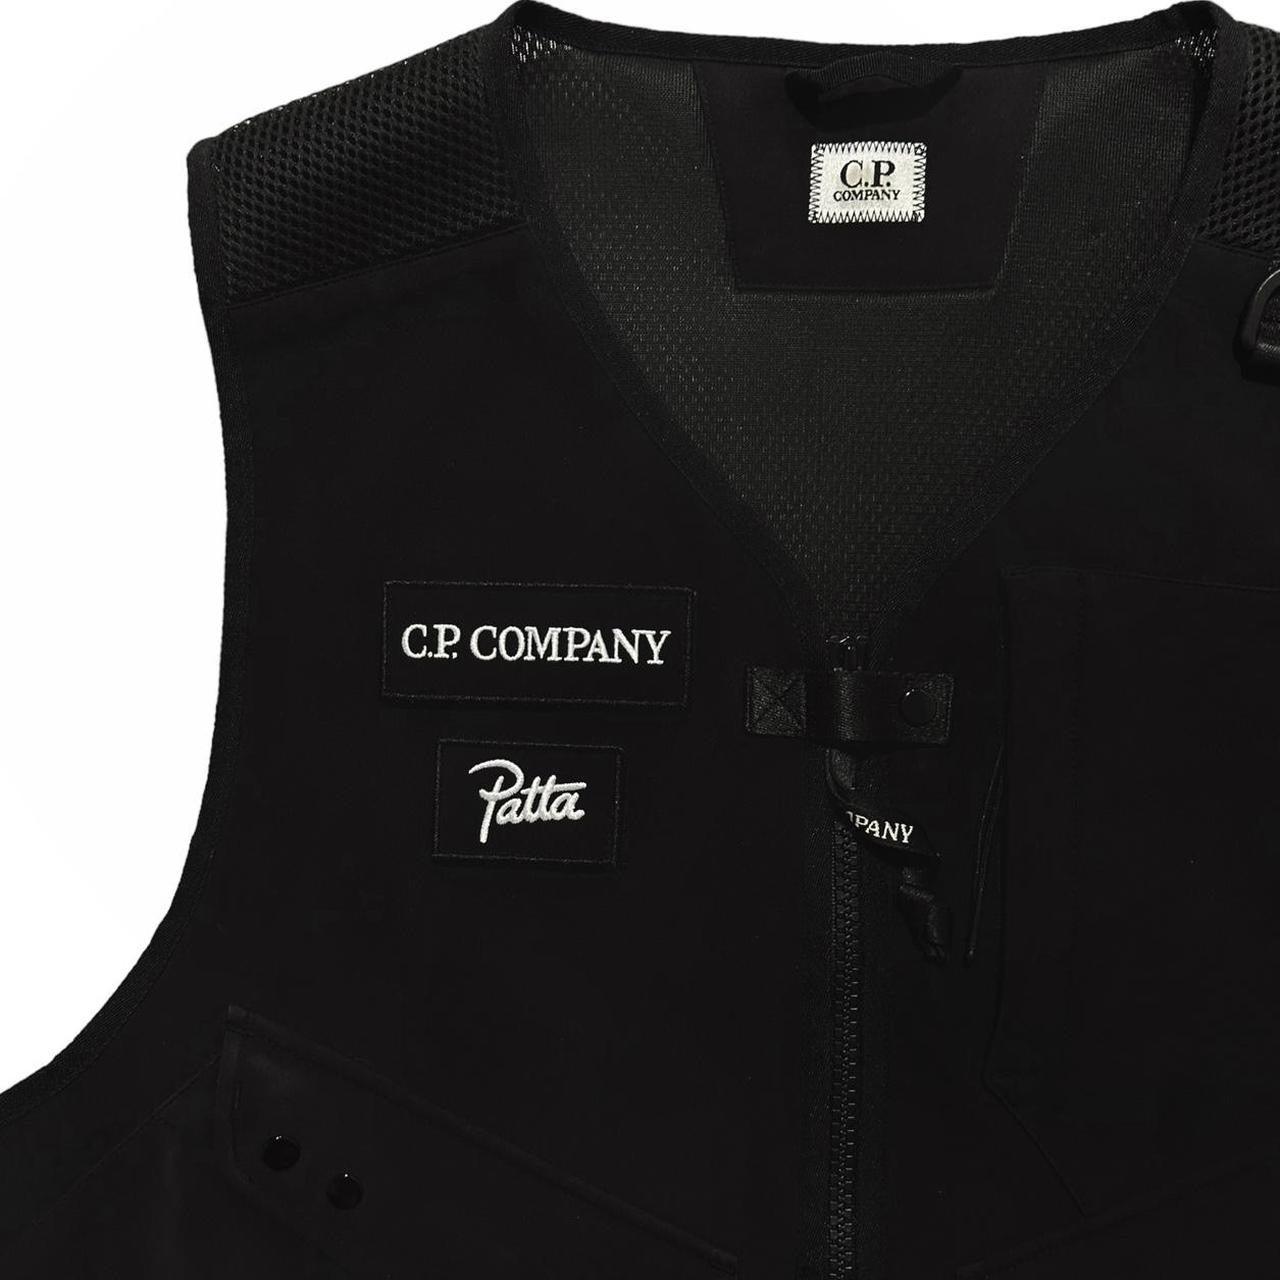 CP Company Patta tactical vest - Known Source